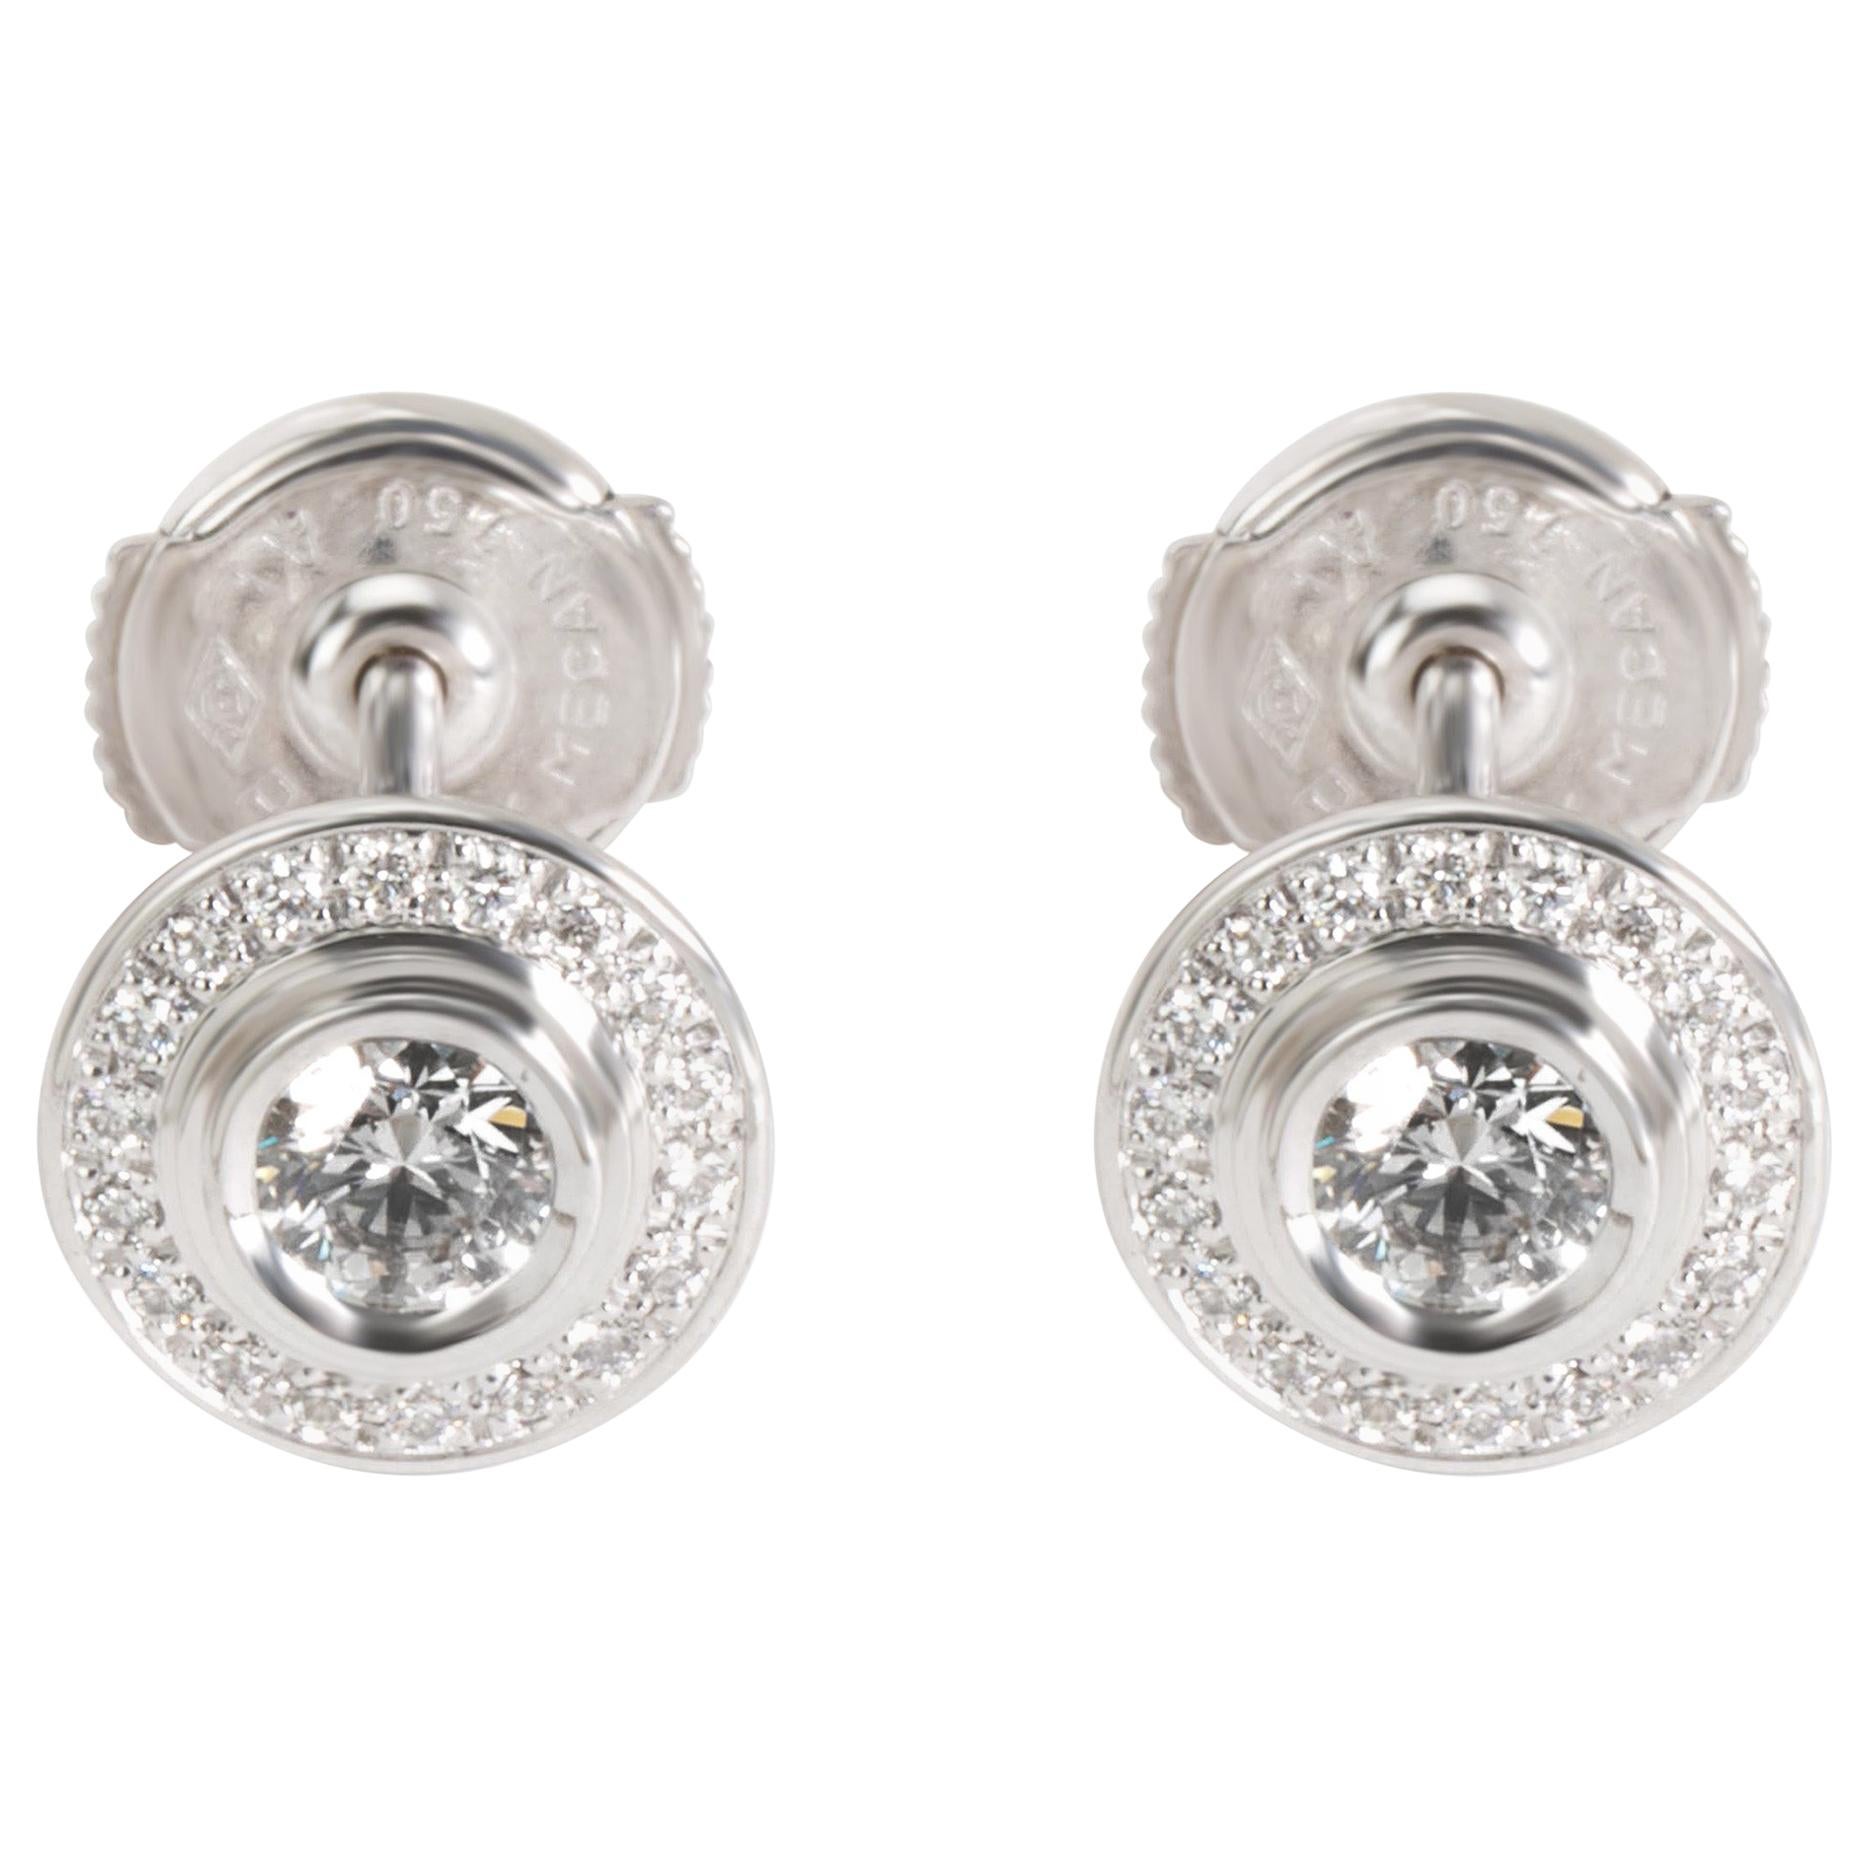 Cartier D'Amour Diamond Stud Earring in 